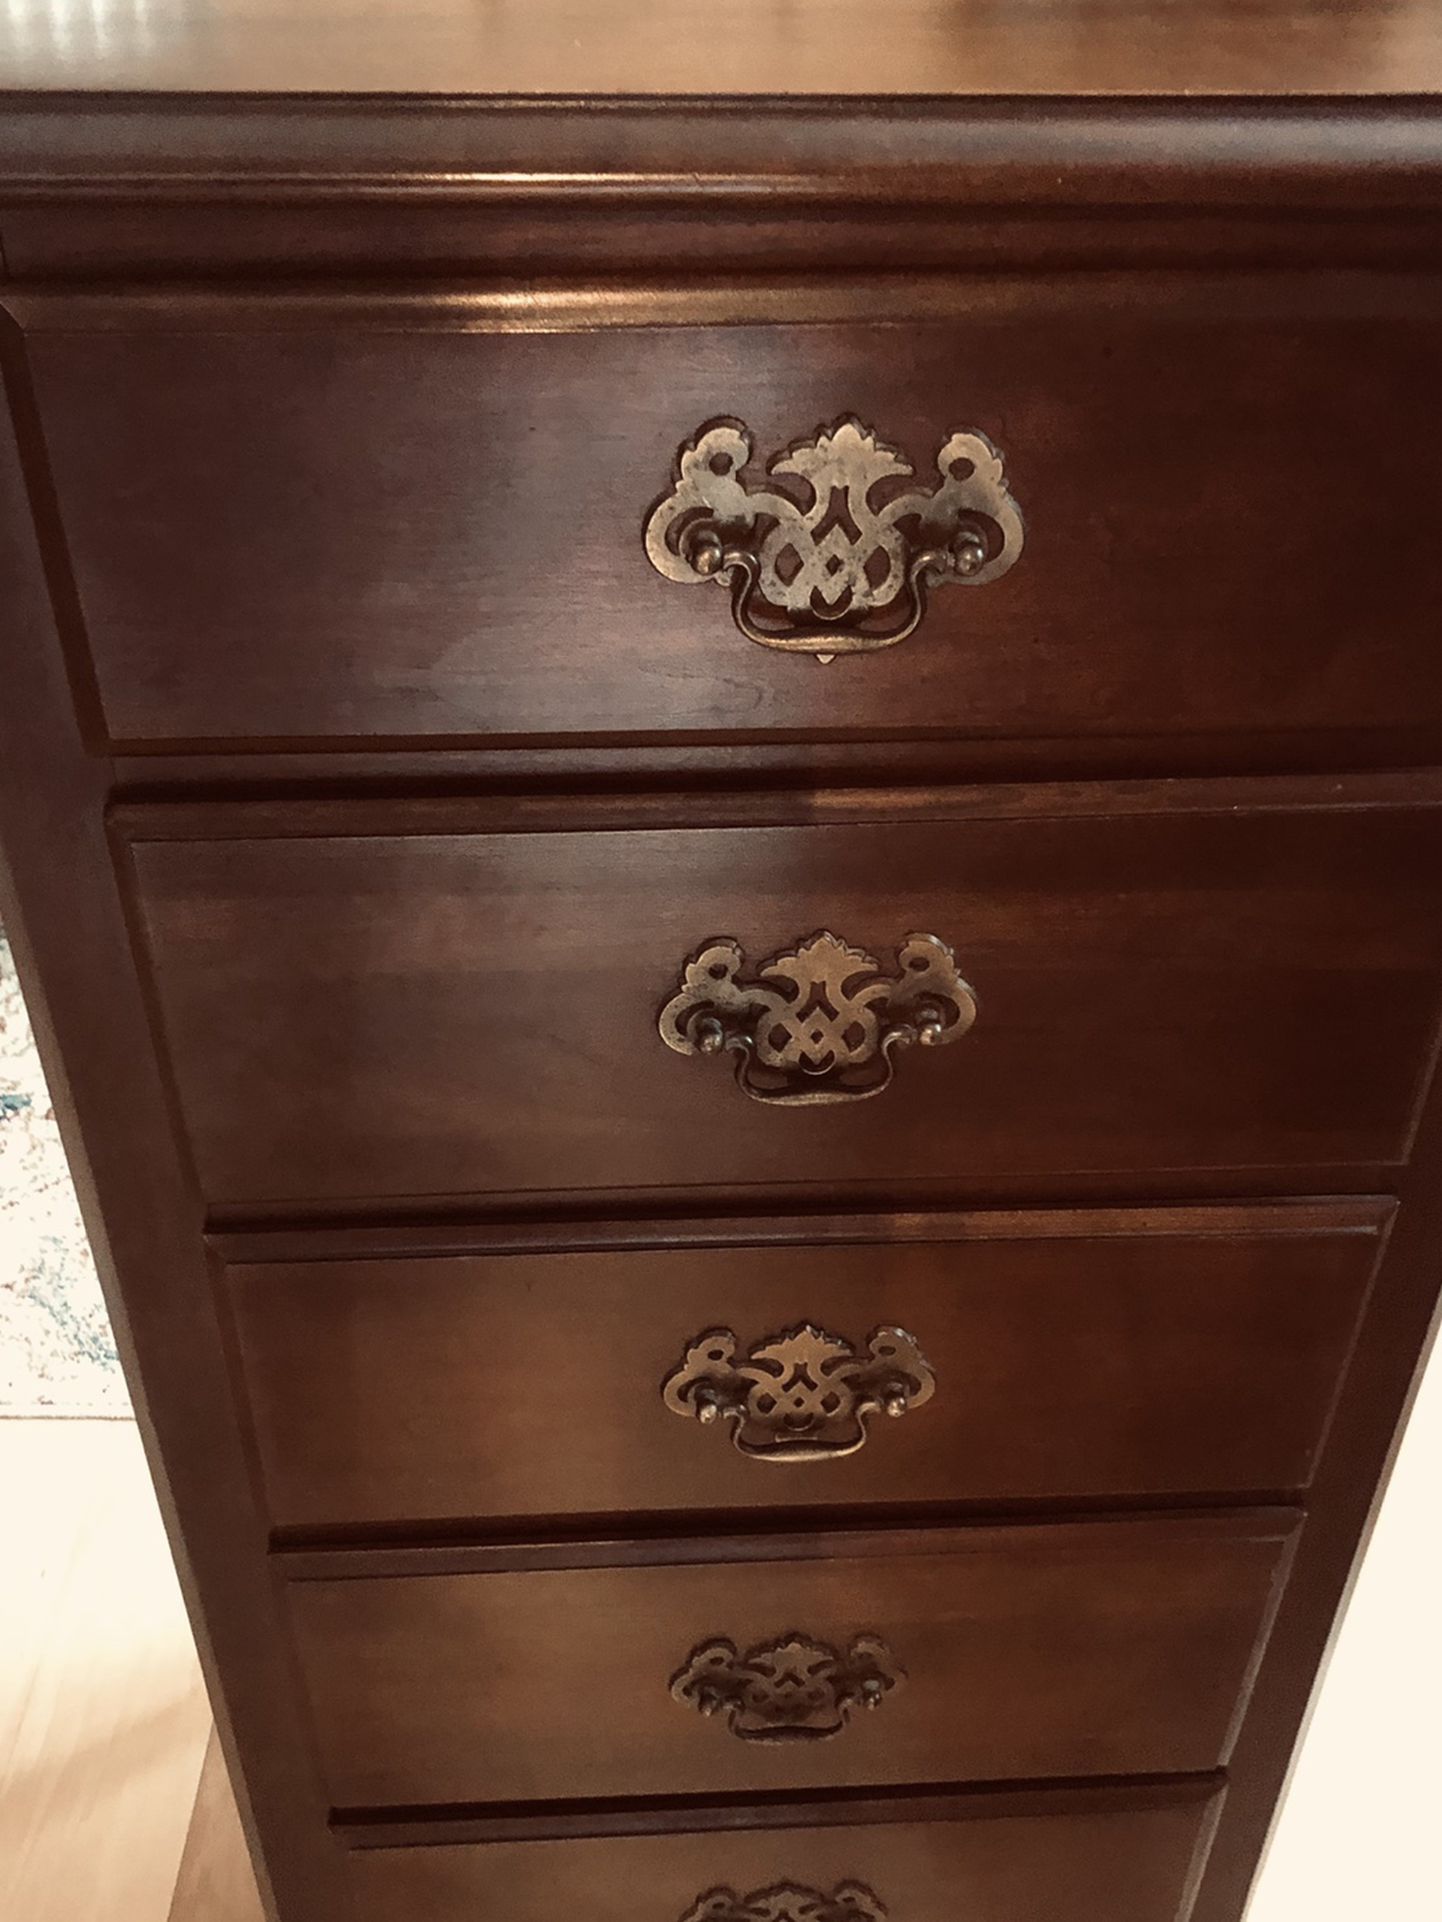 Antique Lingerie dresser in excellent condition